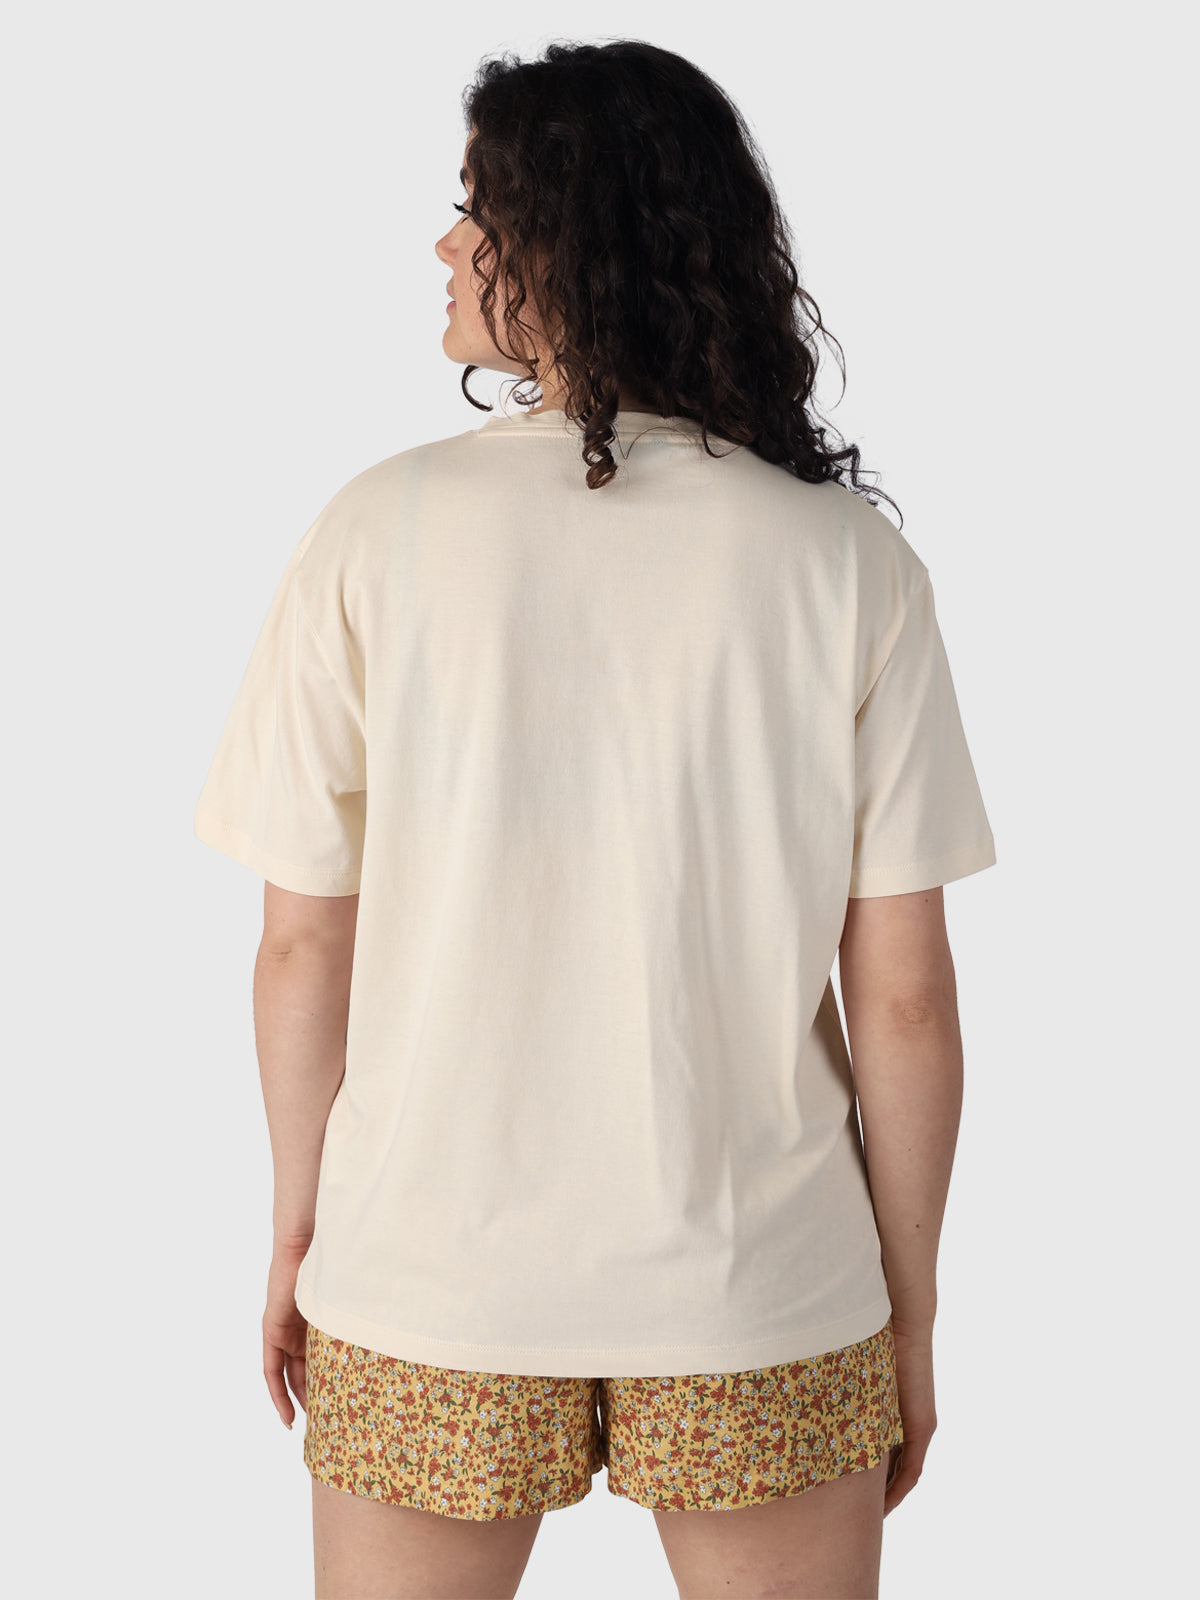 Imani-R Damen T-Shirt | Weiß